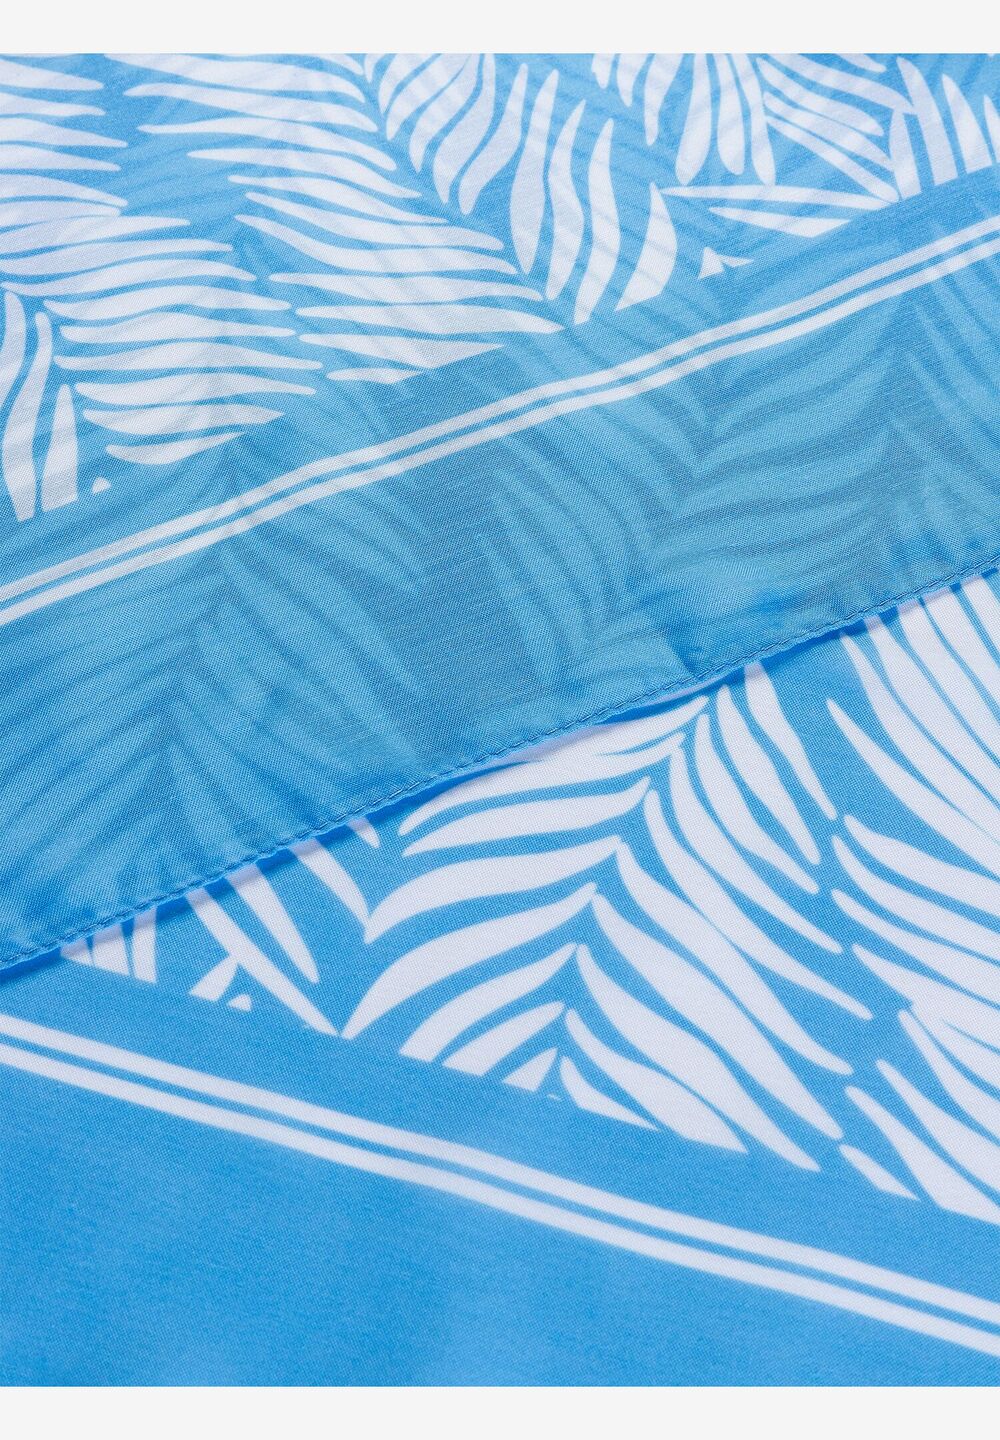 leichter Schal, Palmblätter-Print, Sommer-Kollektion, blauRückansicht